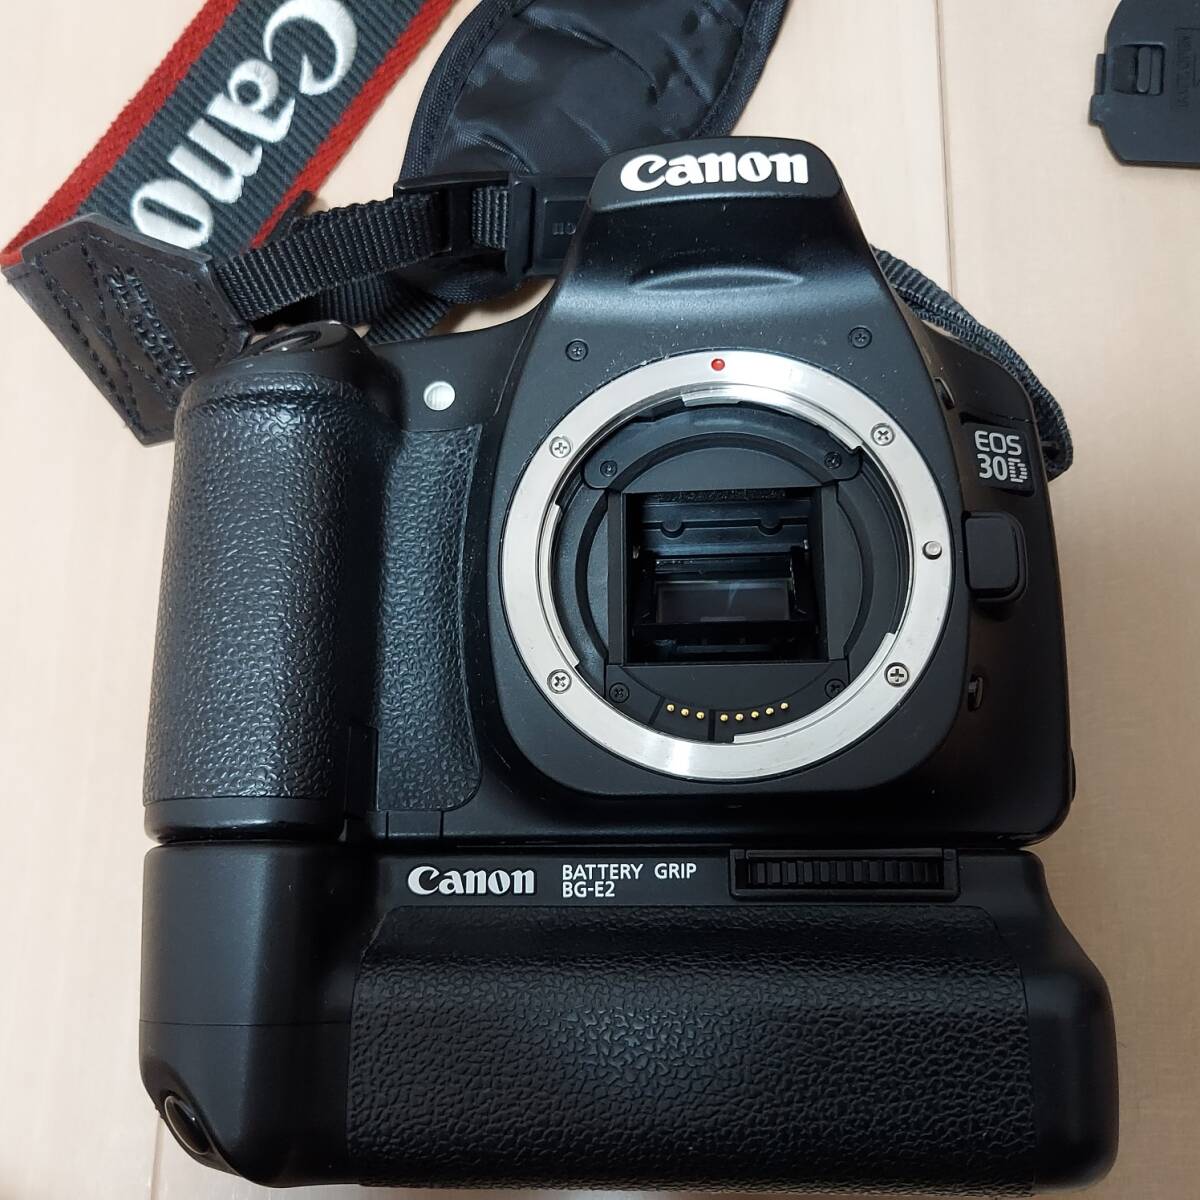 Canon キャノン EOS 30D、EF-S 18-55mm 1:3.5-5.6 II USM、BATTERY GRIP BG-E2、他 中古 現状品◆20322-21433_画像3